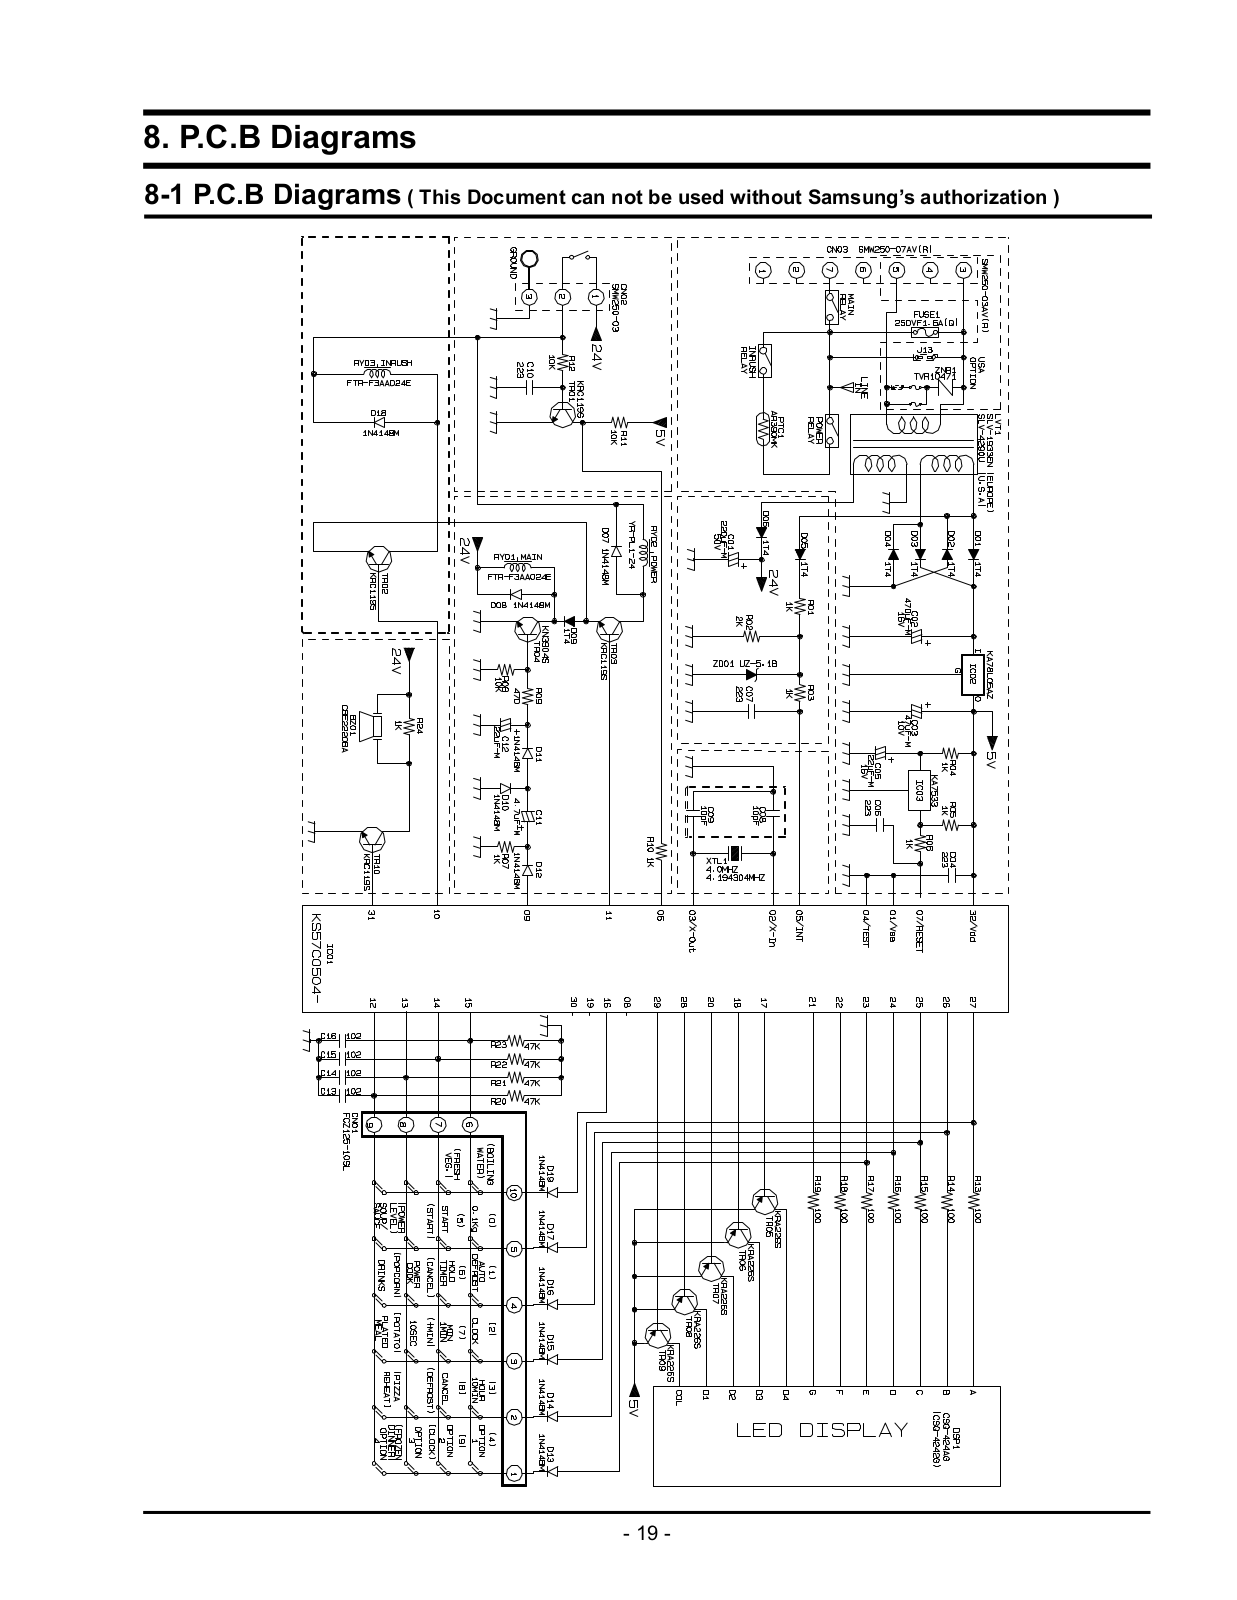 SAMSUNG M1833NR Schematic PCB Diagram